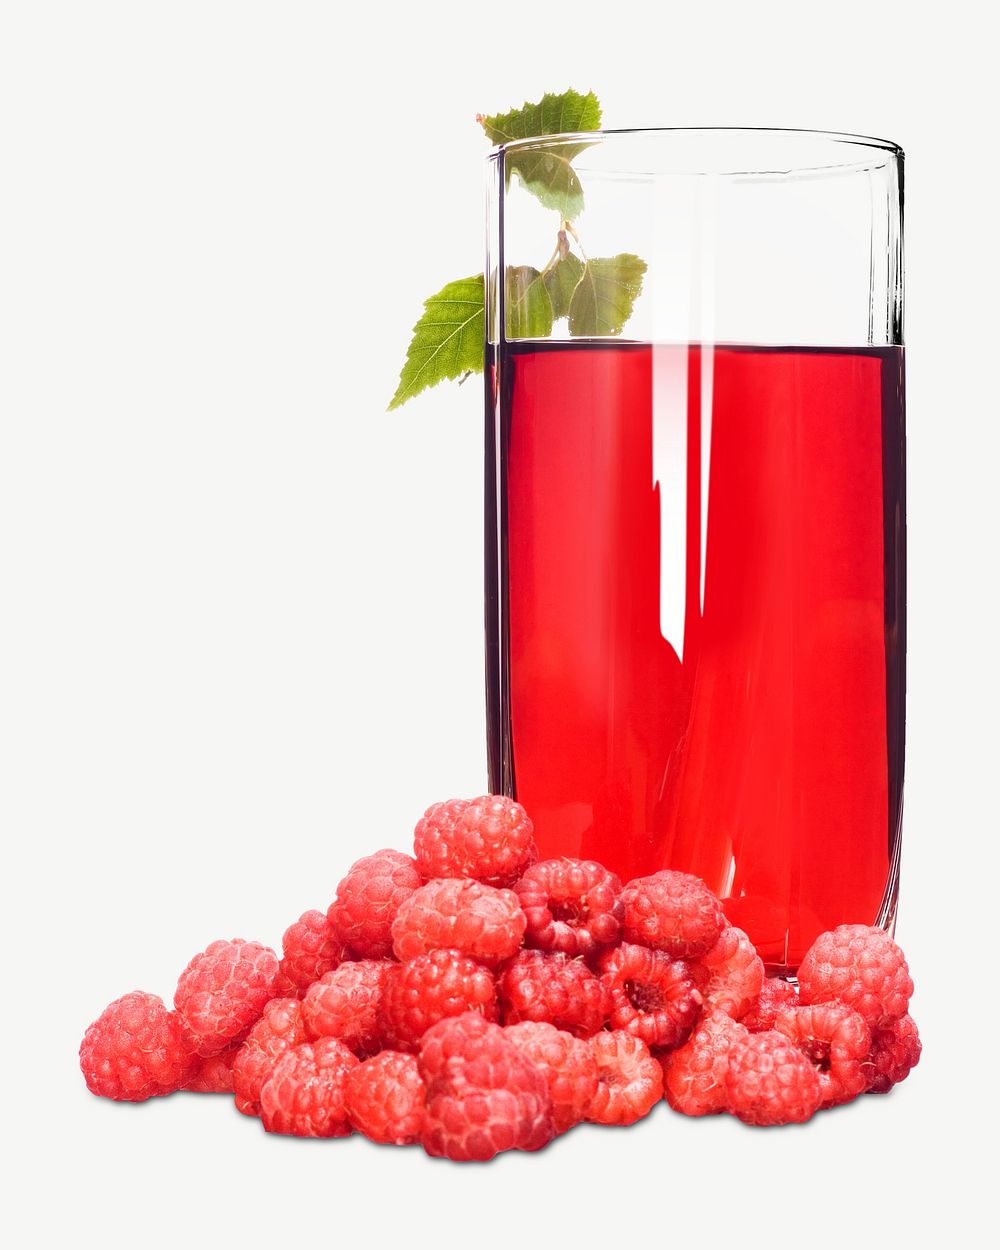 Raspberries juice image graphic psd